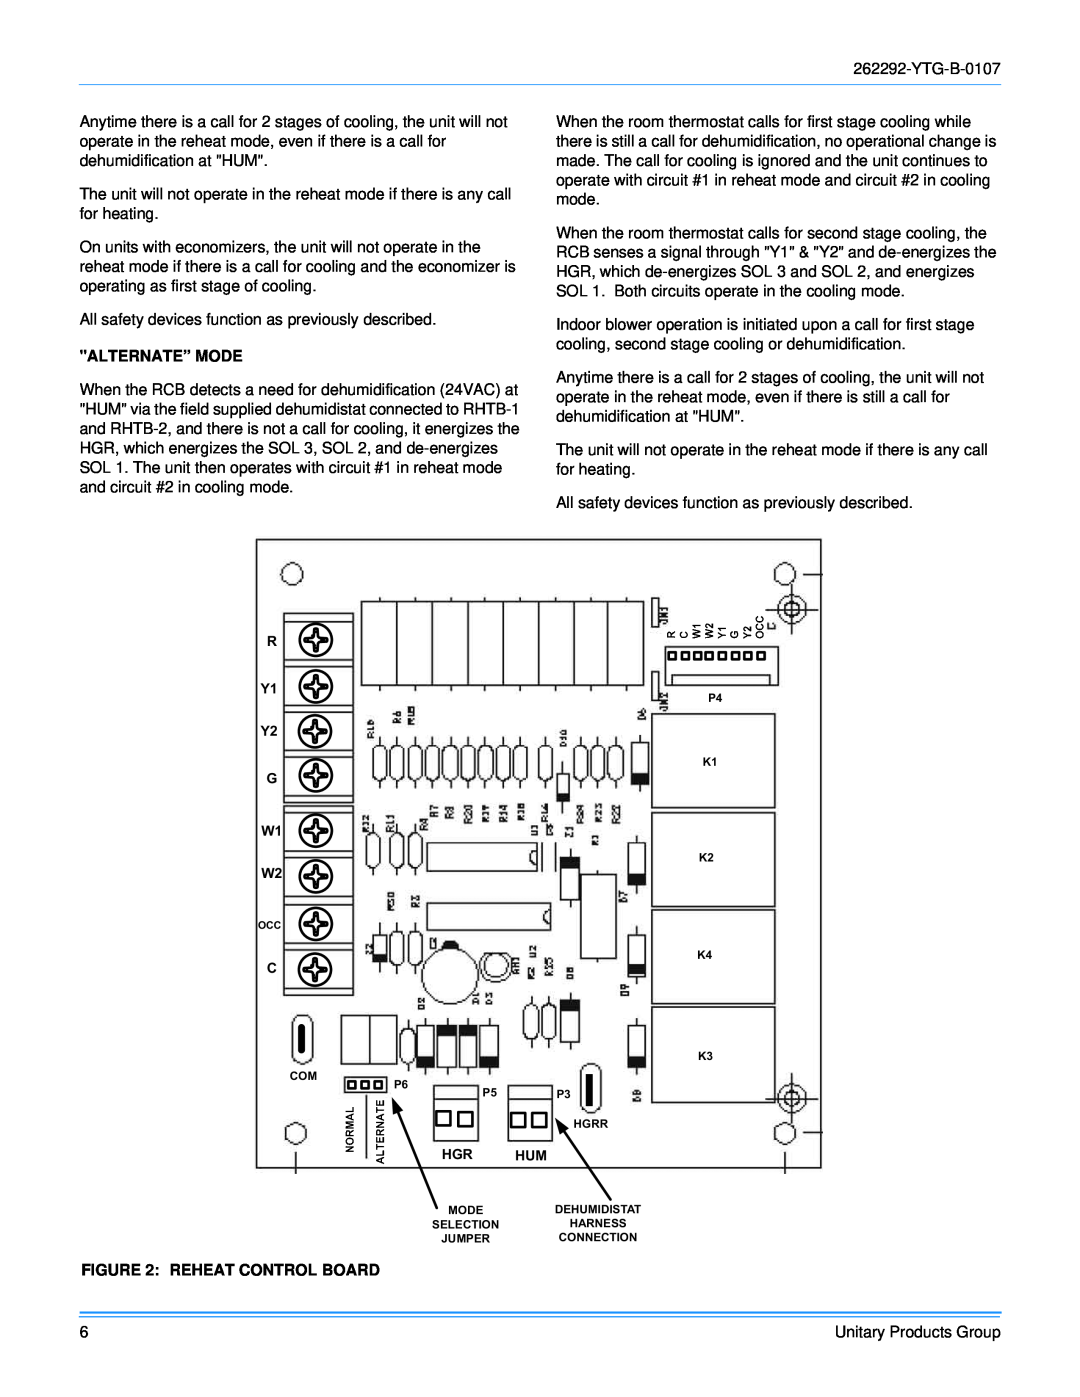 York WR300, WR240 warranty Alternate” Mode, Reheat Control Board 